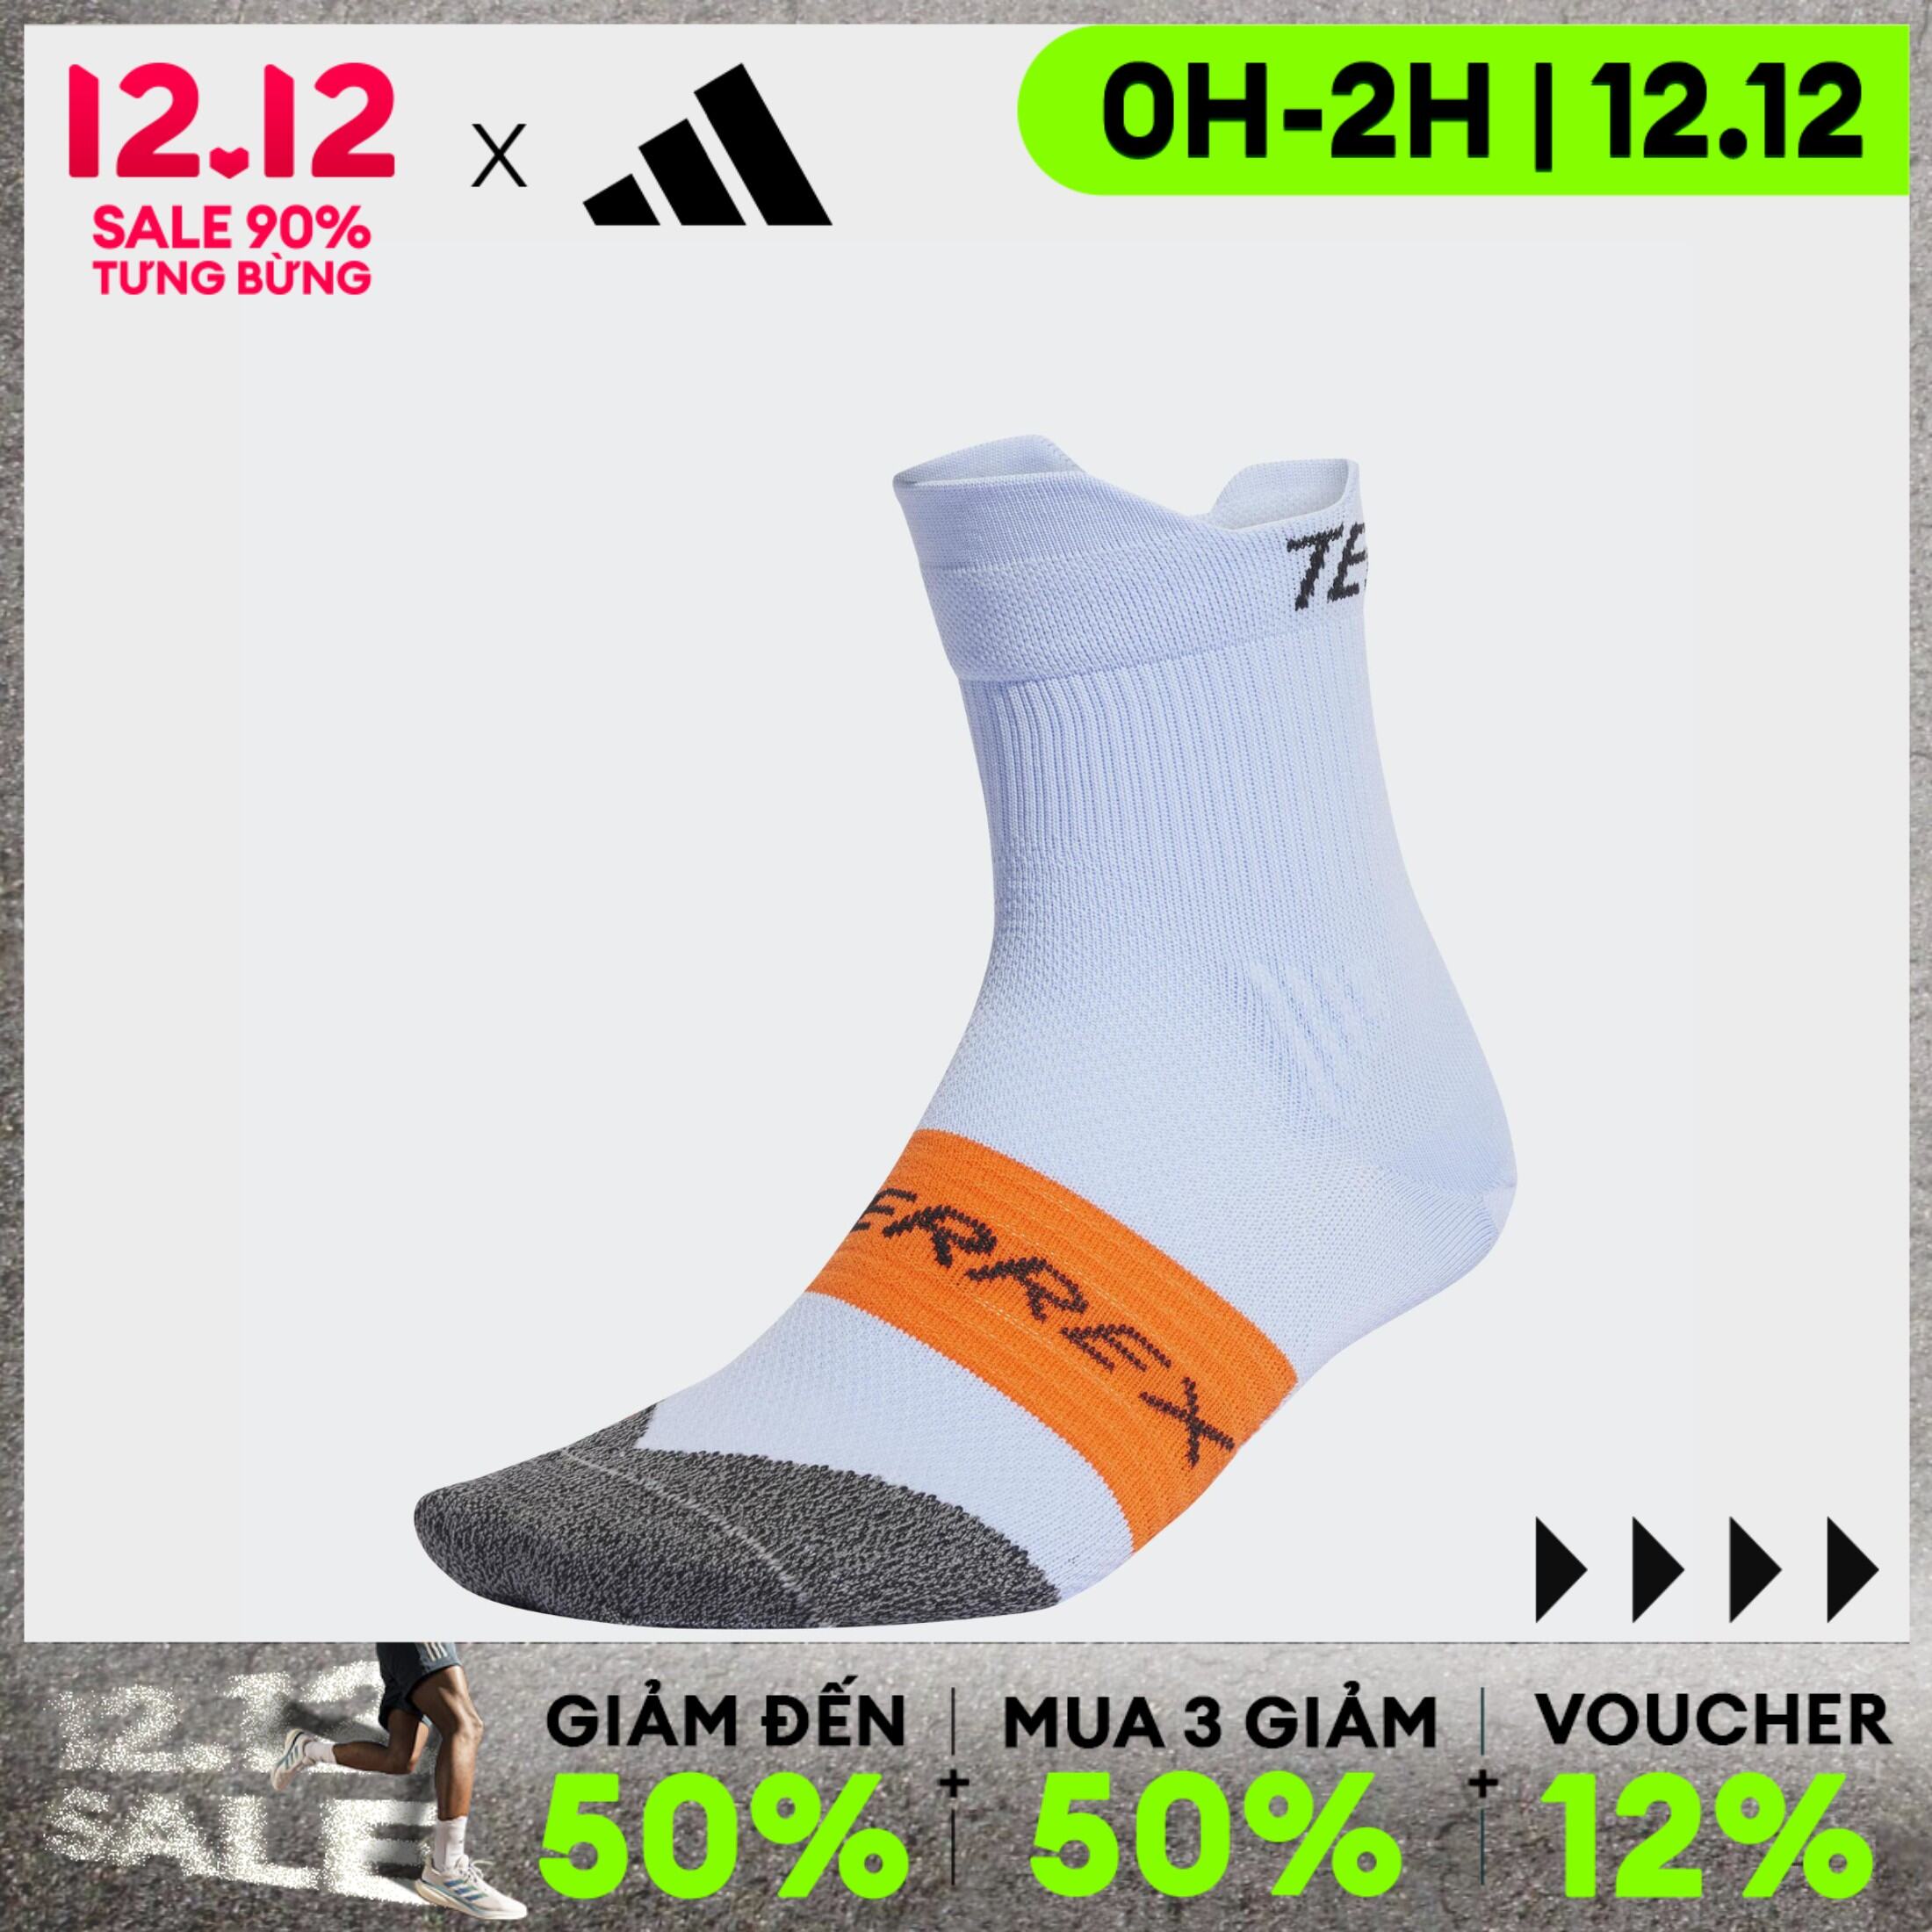 CHỈ 0H 12.12 - MUA 3 GIẢM 50% adidas Trail Running Tất Cổ Cao Chạy Trail